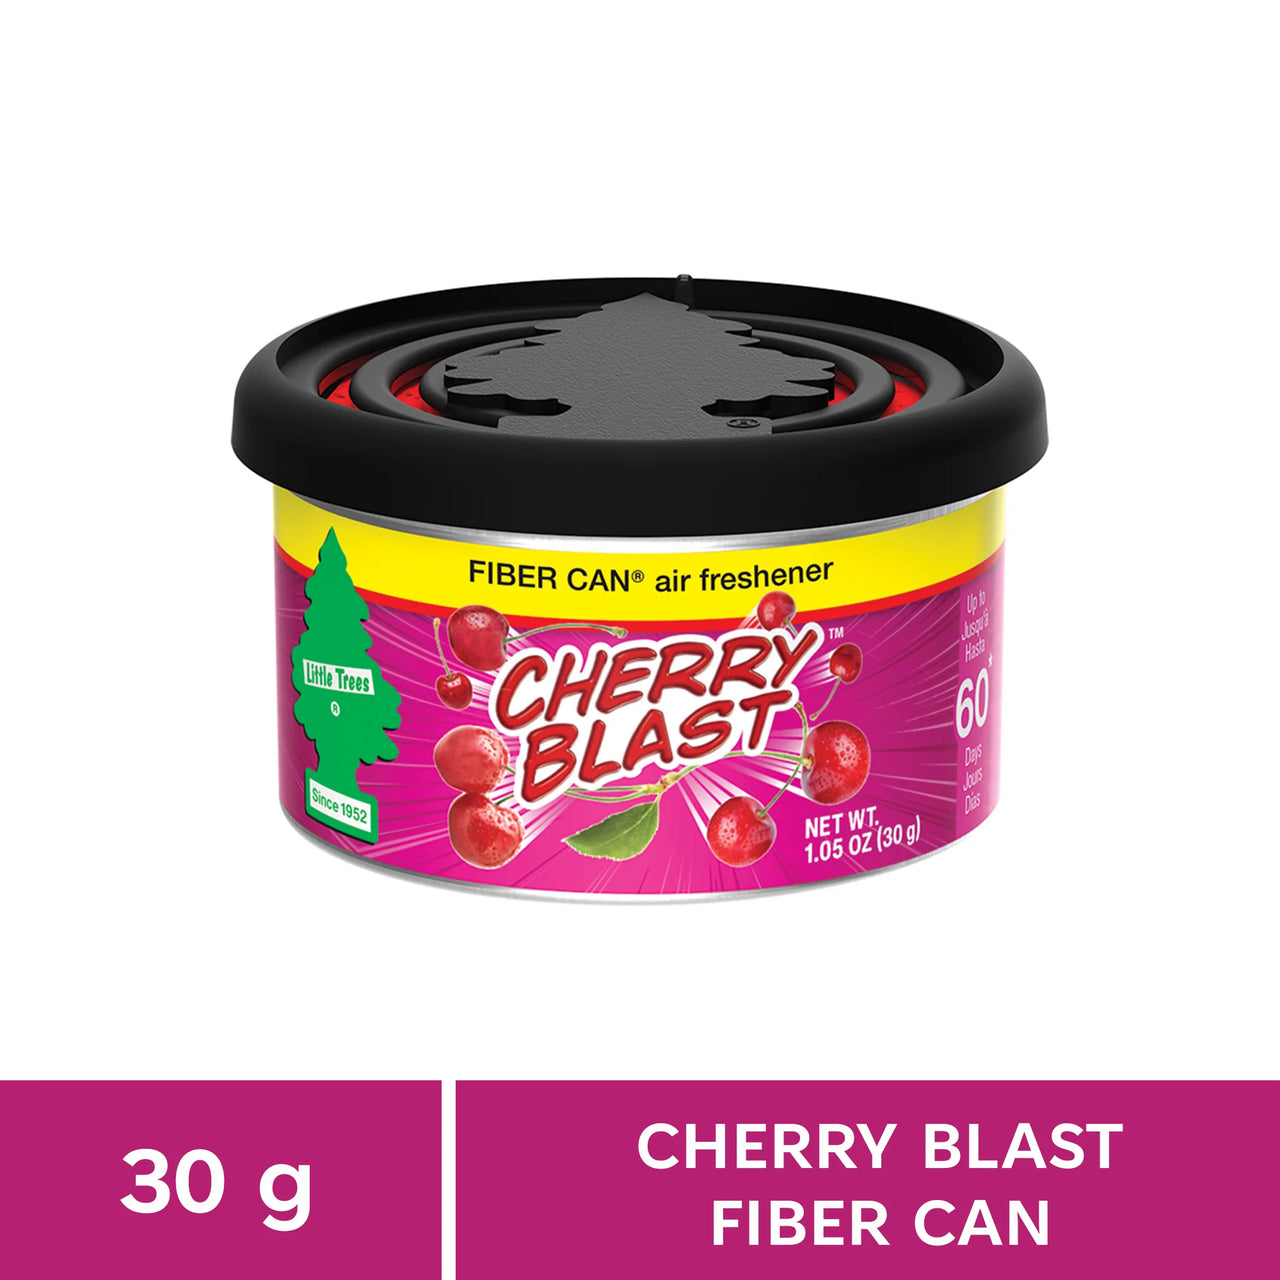 LITTLE TREES-Fiber Can-Cherry Blast-1 piece-30g